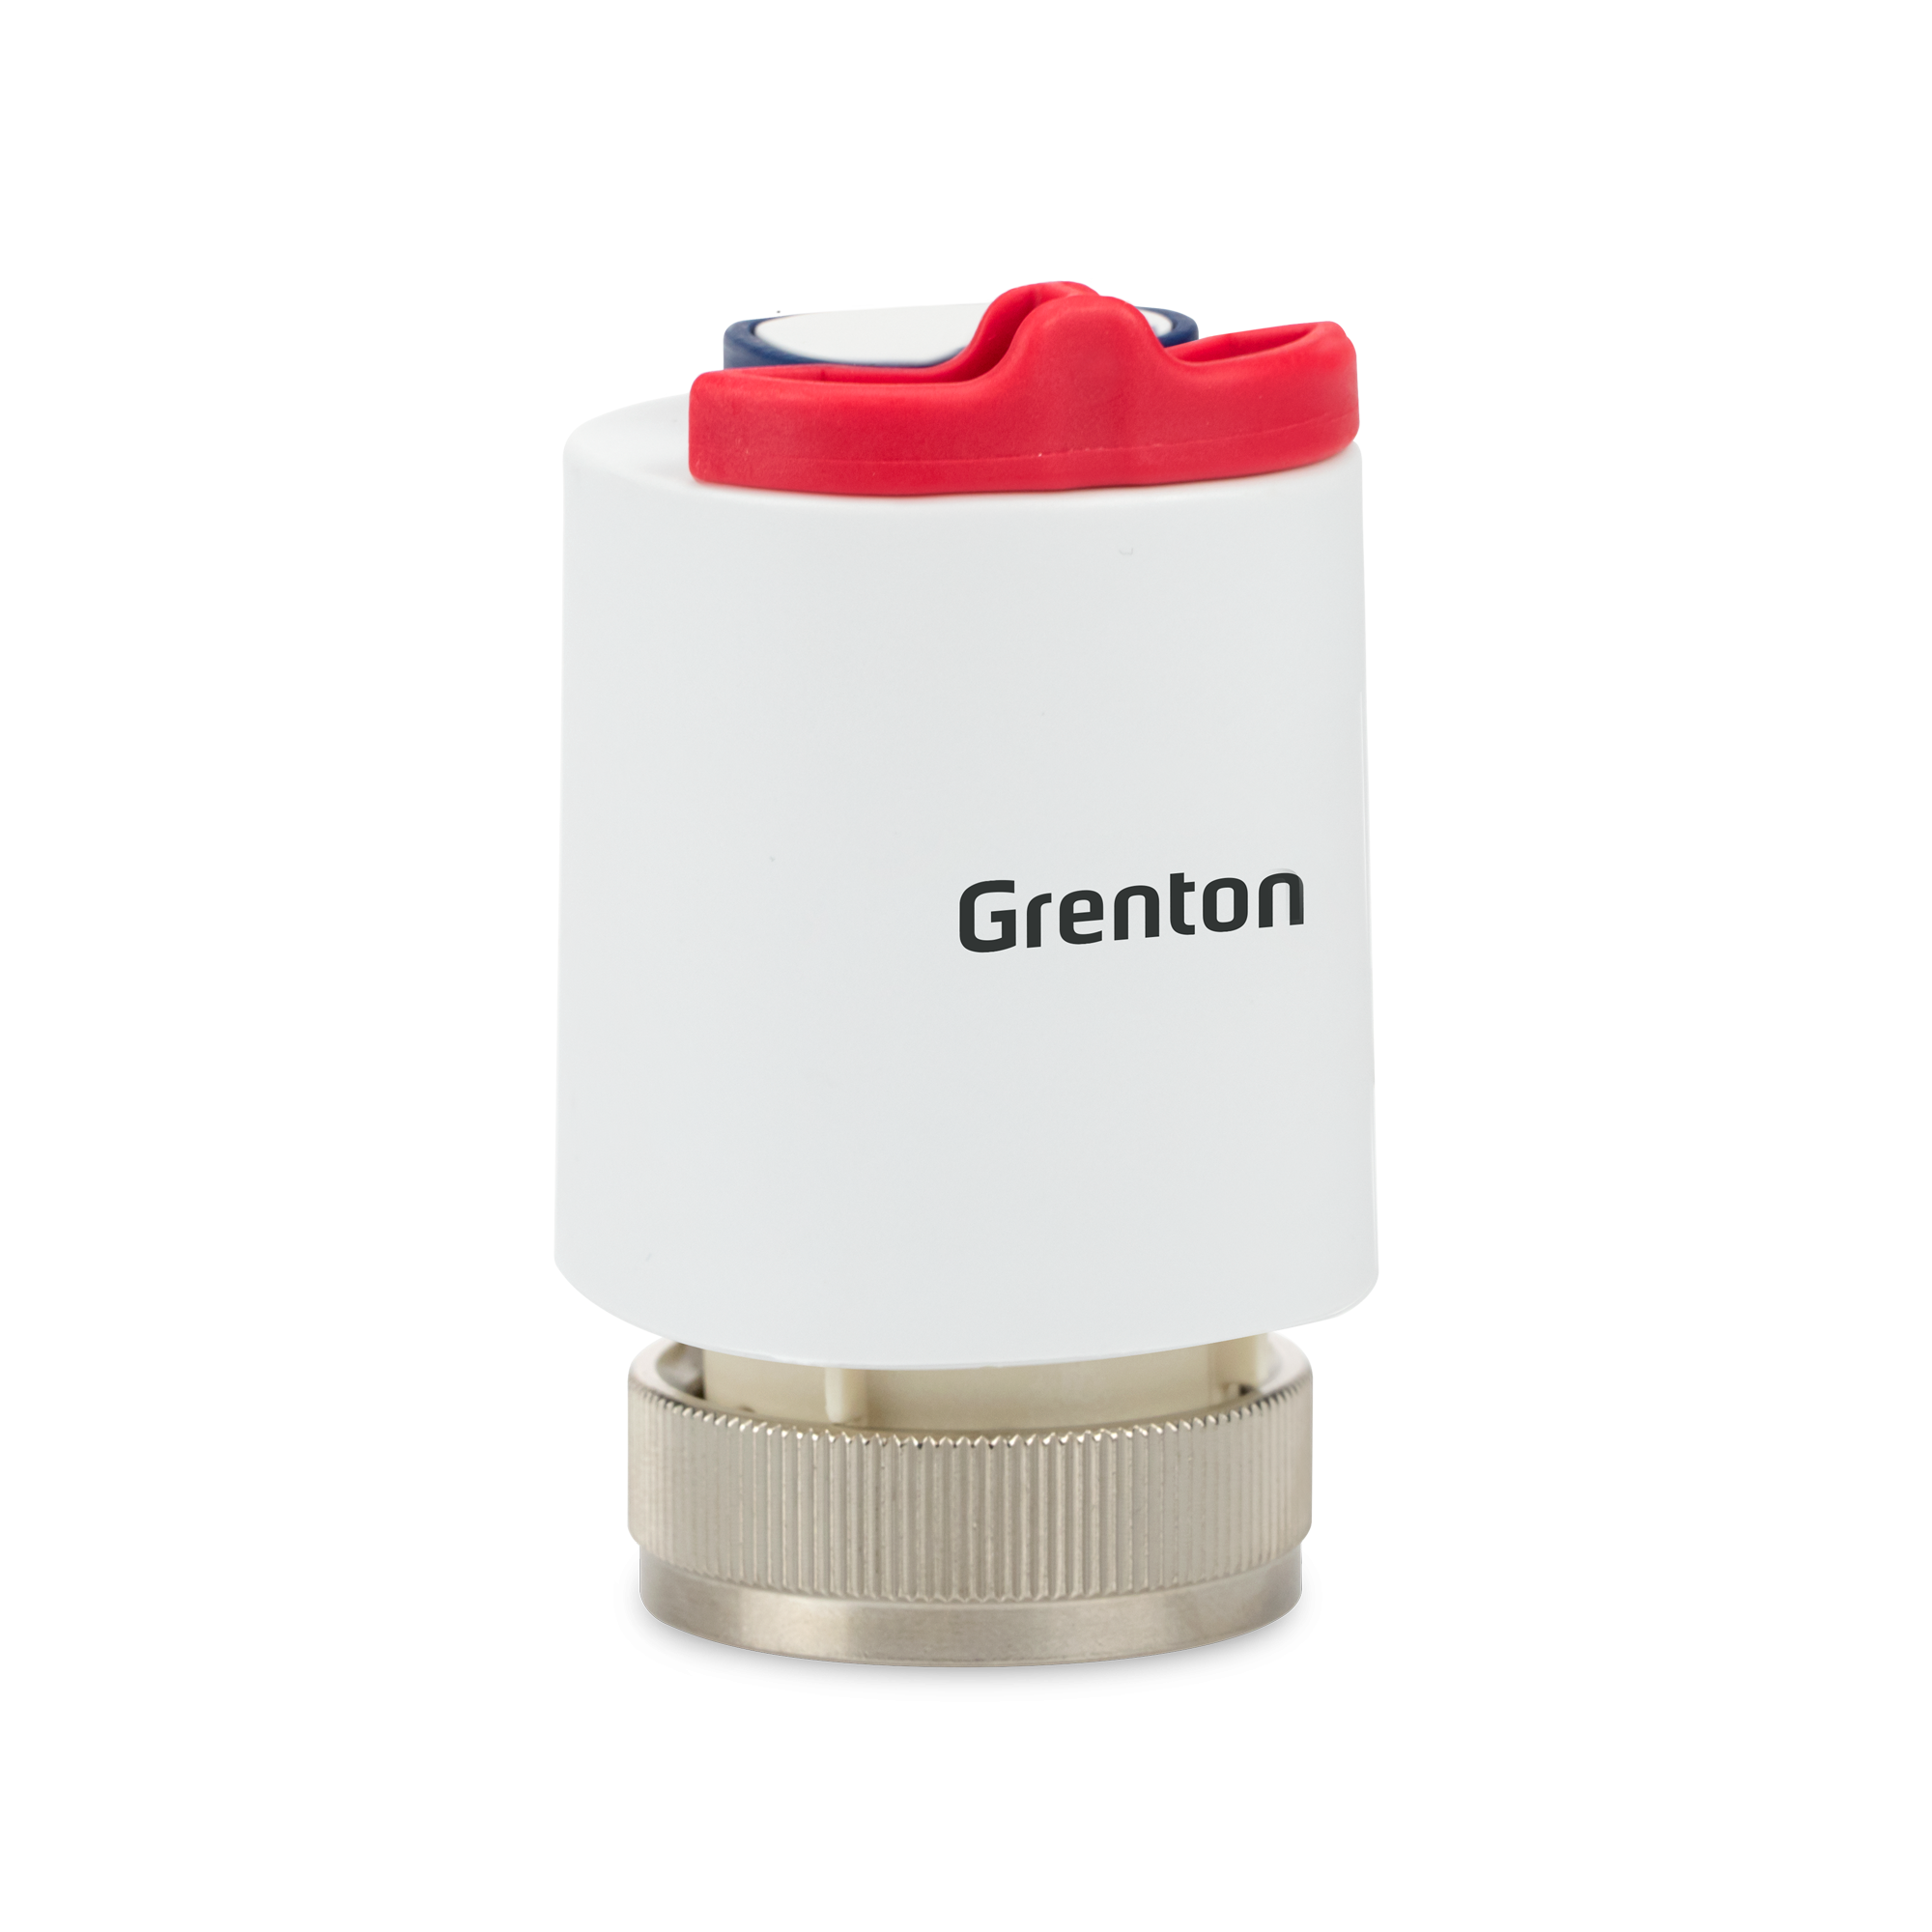 GRENTON ELECTRO-THERMAL ACTUATOR NC 230V, M30x1,5